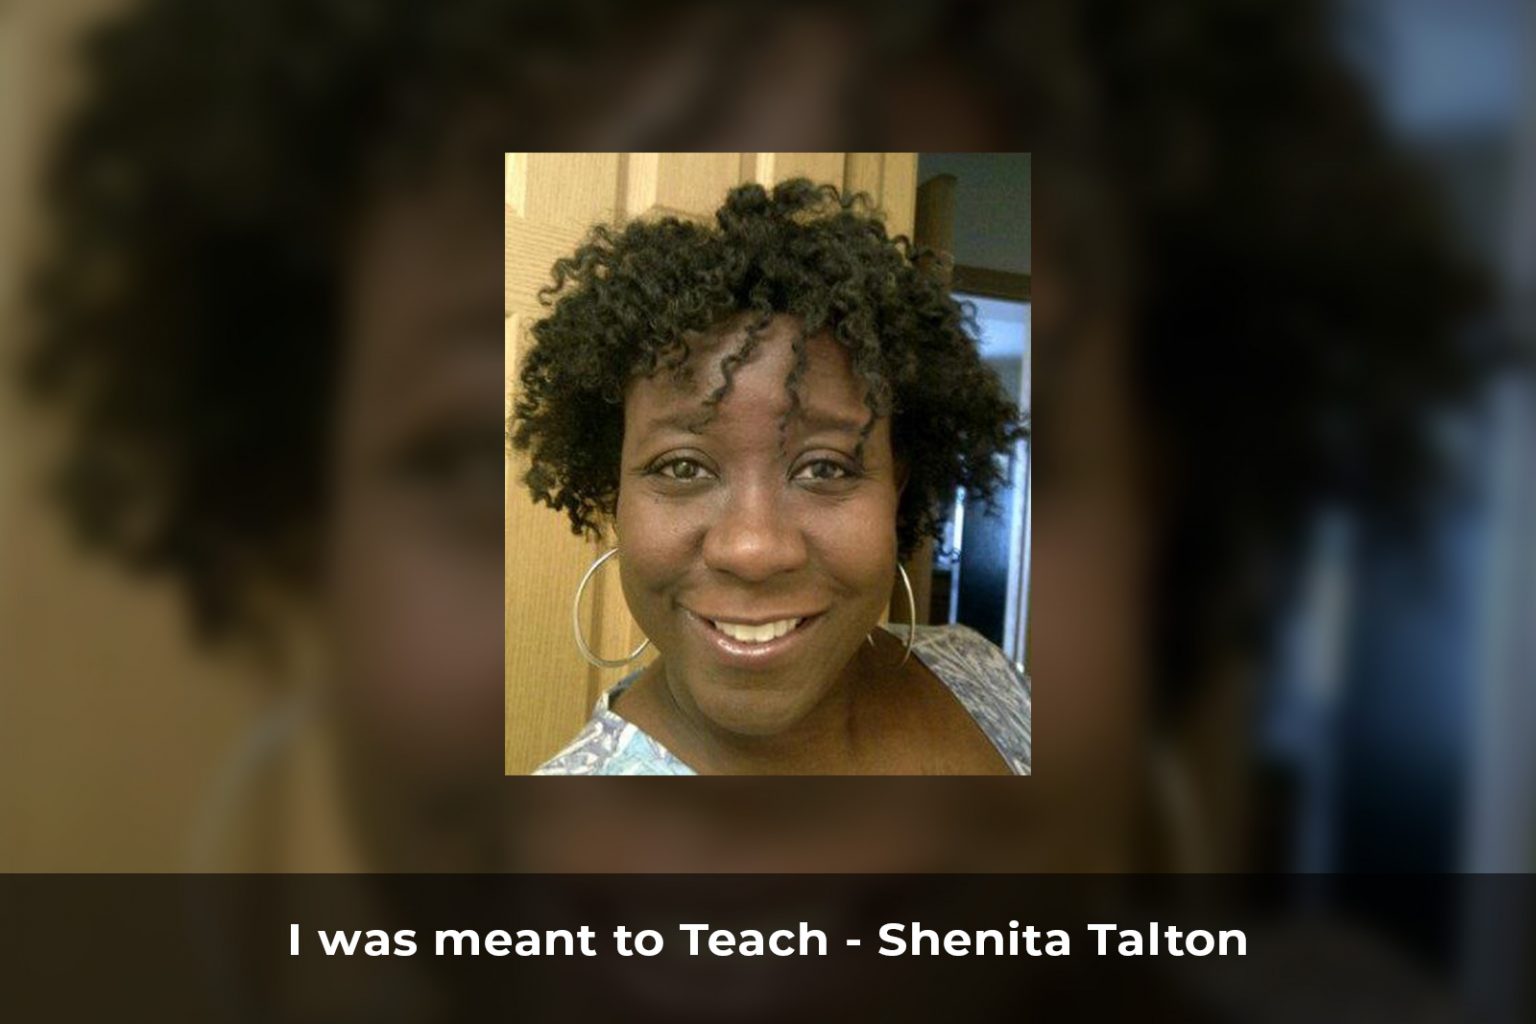 I was meant to Teach - Shenita Talton